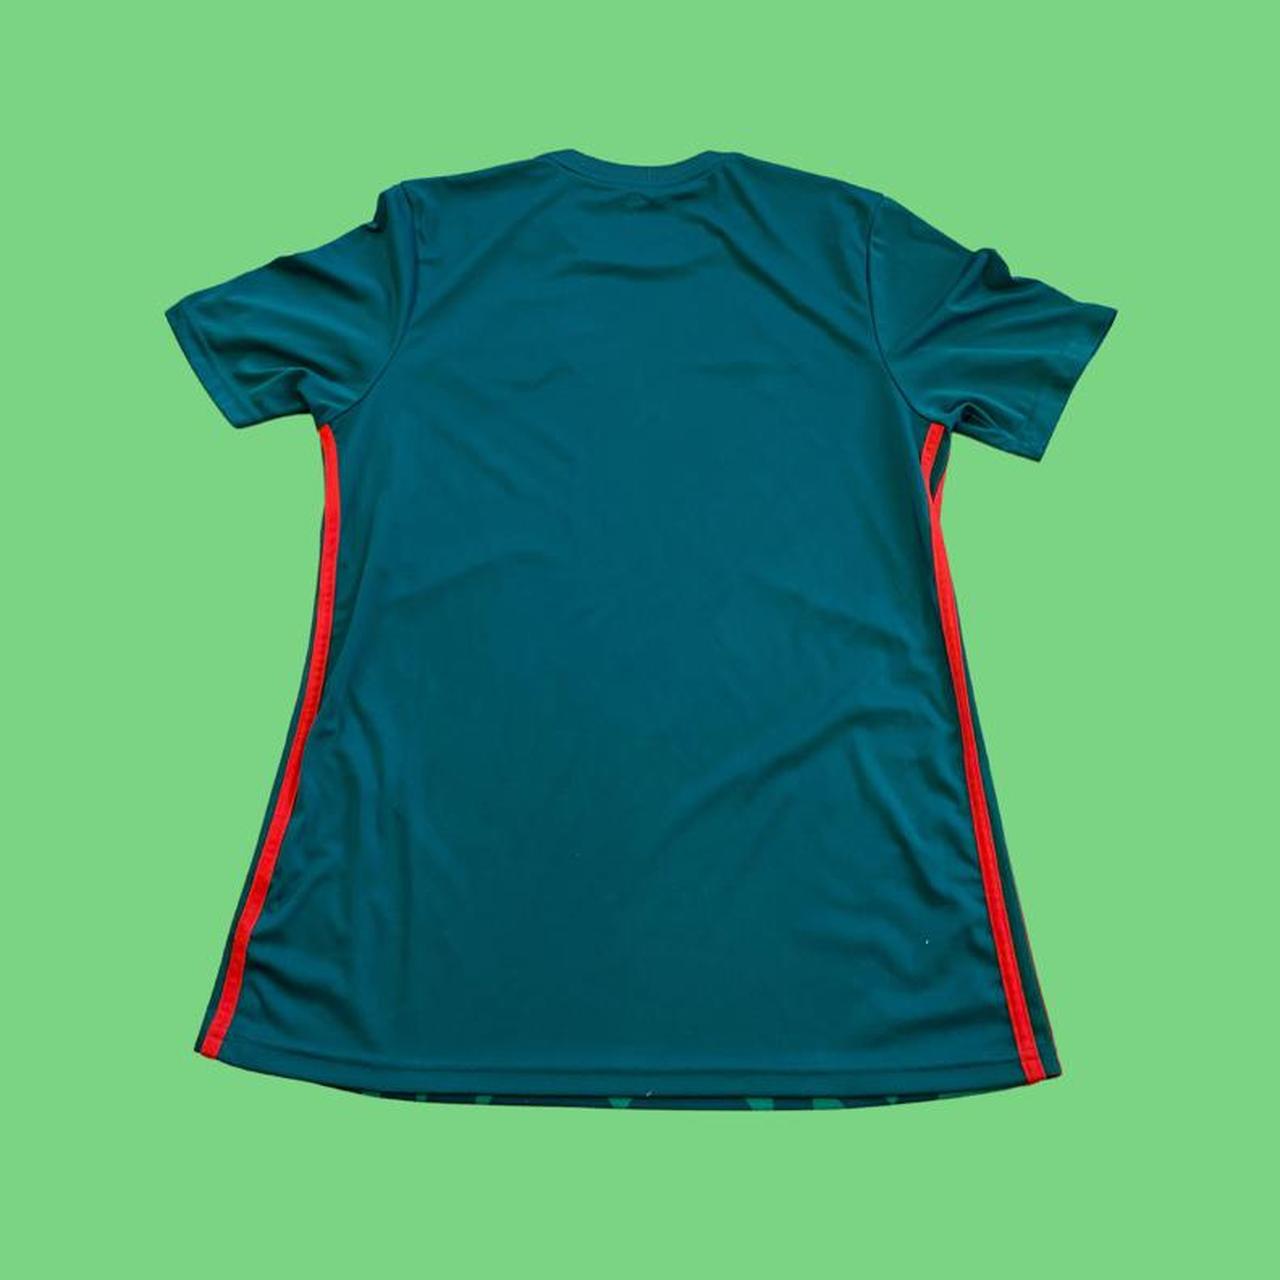 Product Image 2 - Modern Mexico training football shirt